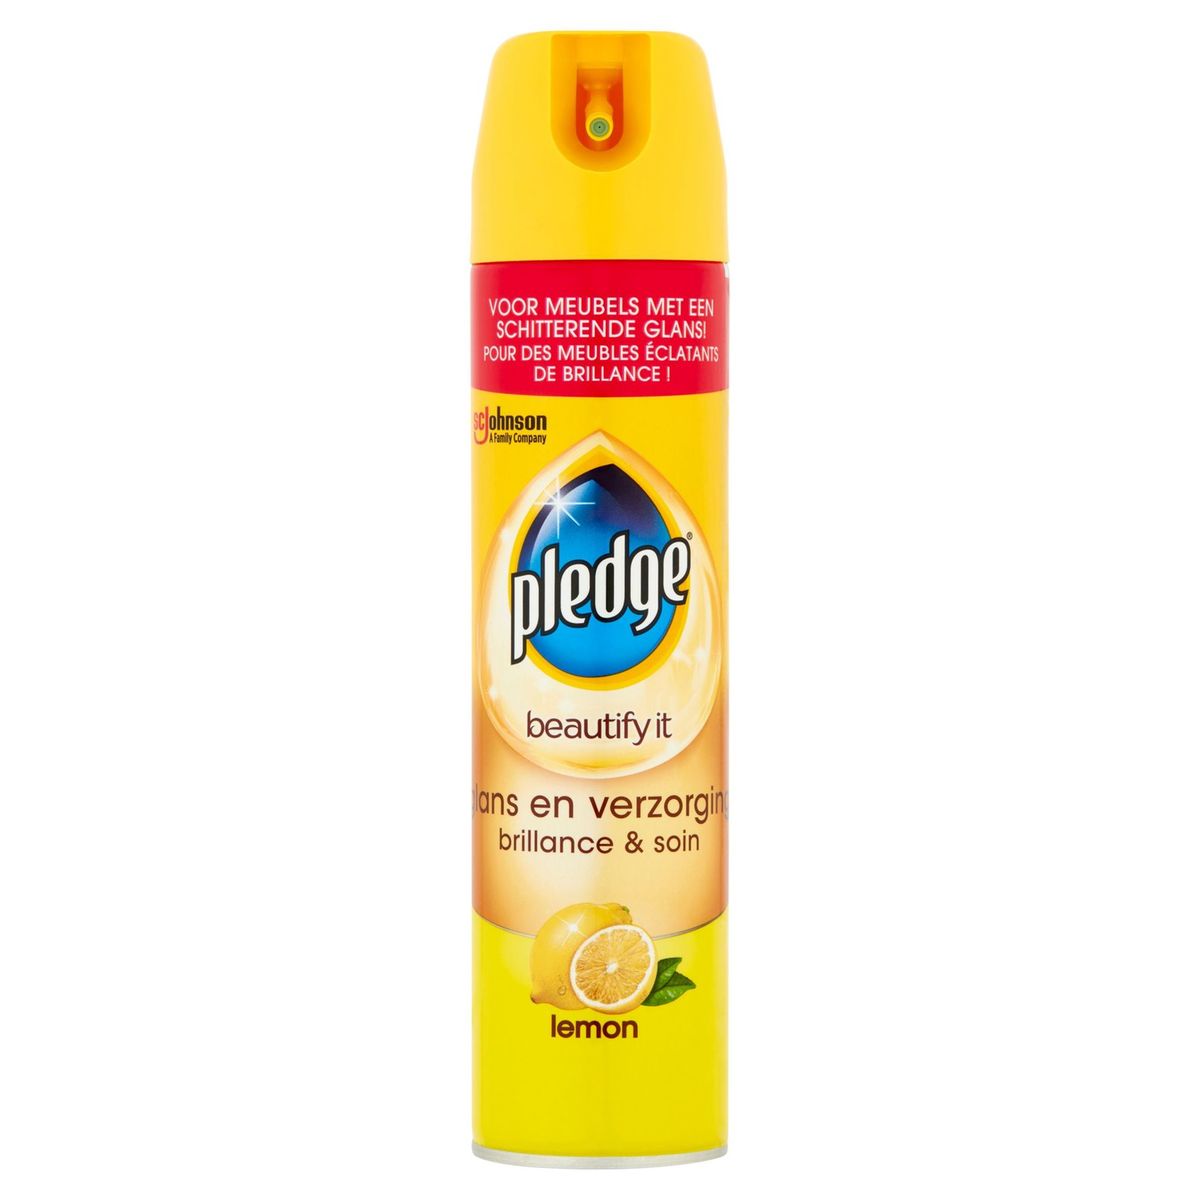 Pledge®-Beautify It- Brillance & Soin- Lemon- 300 ml